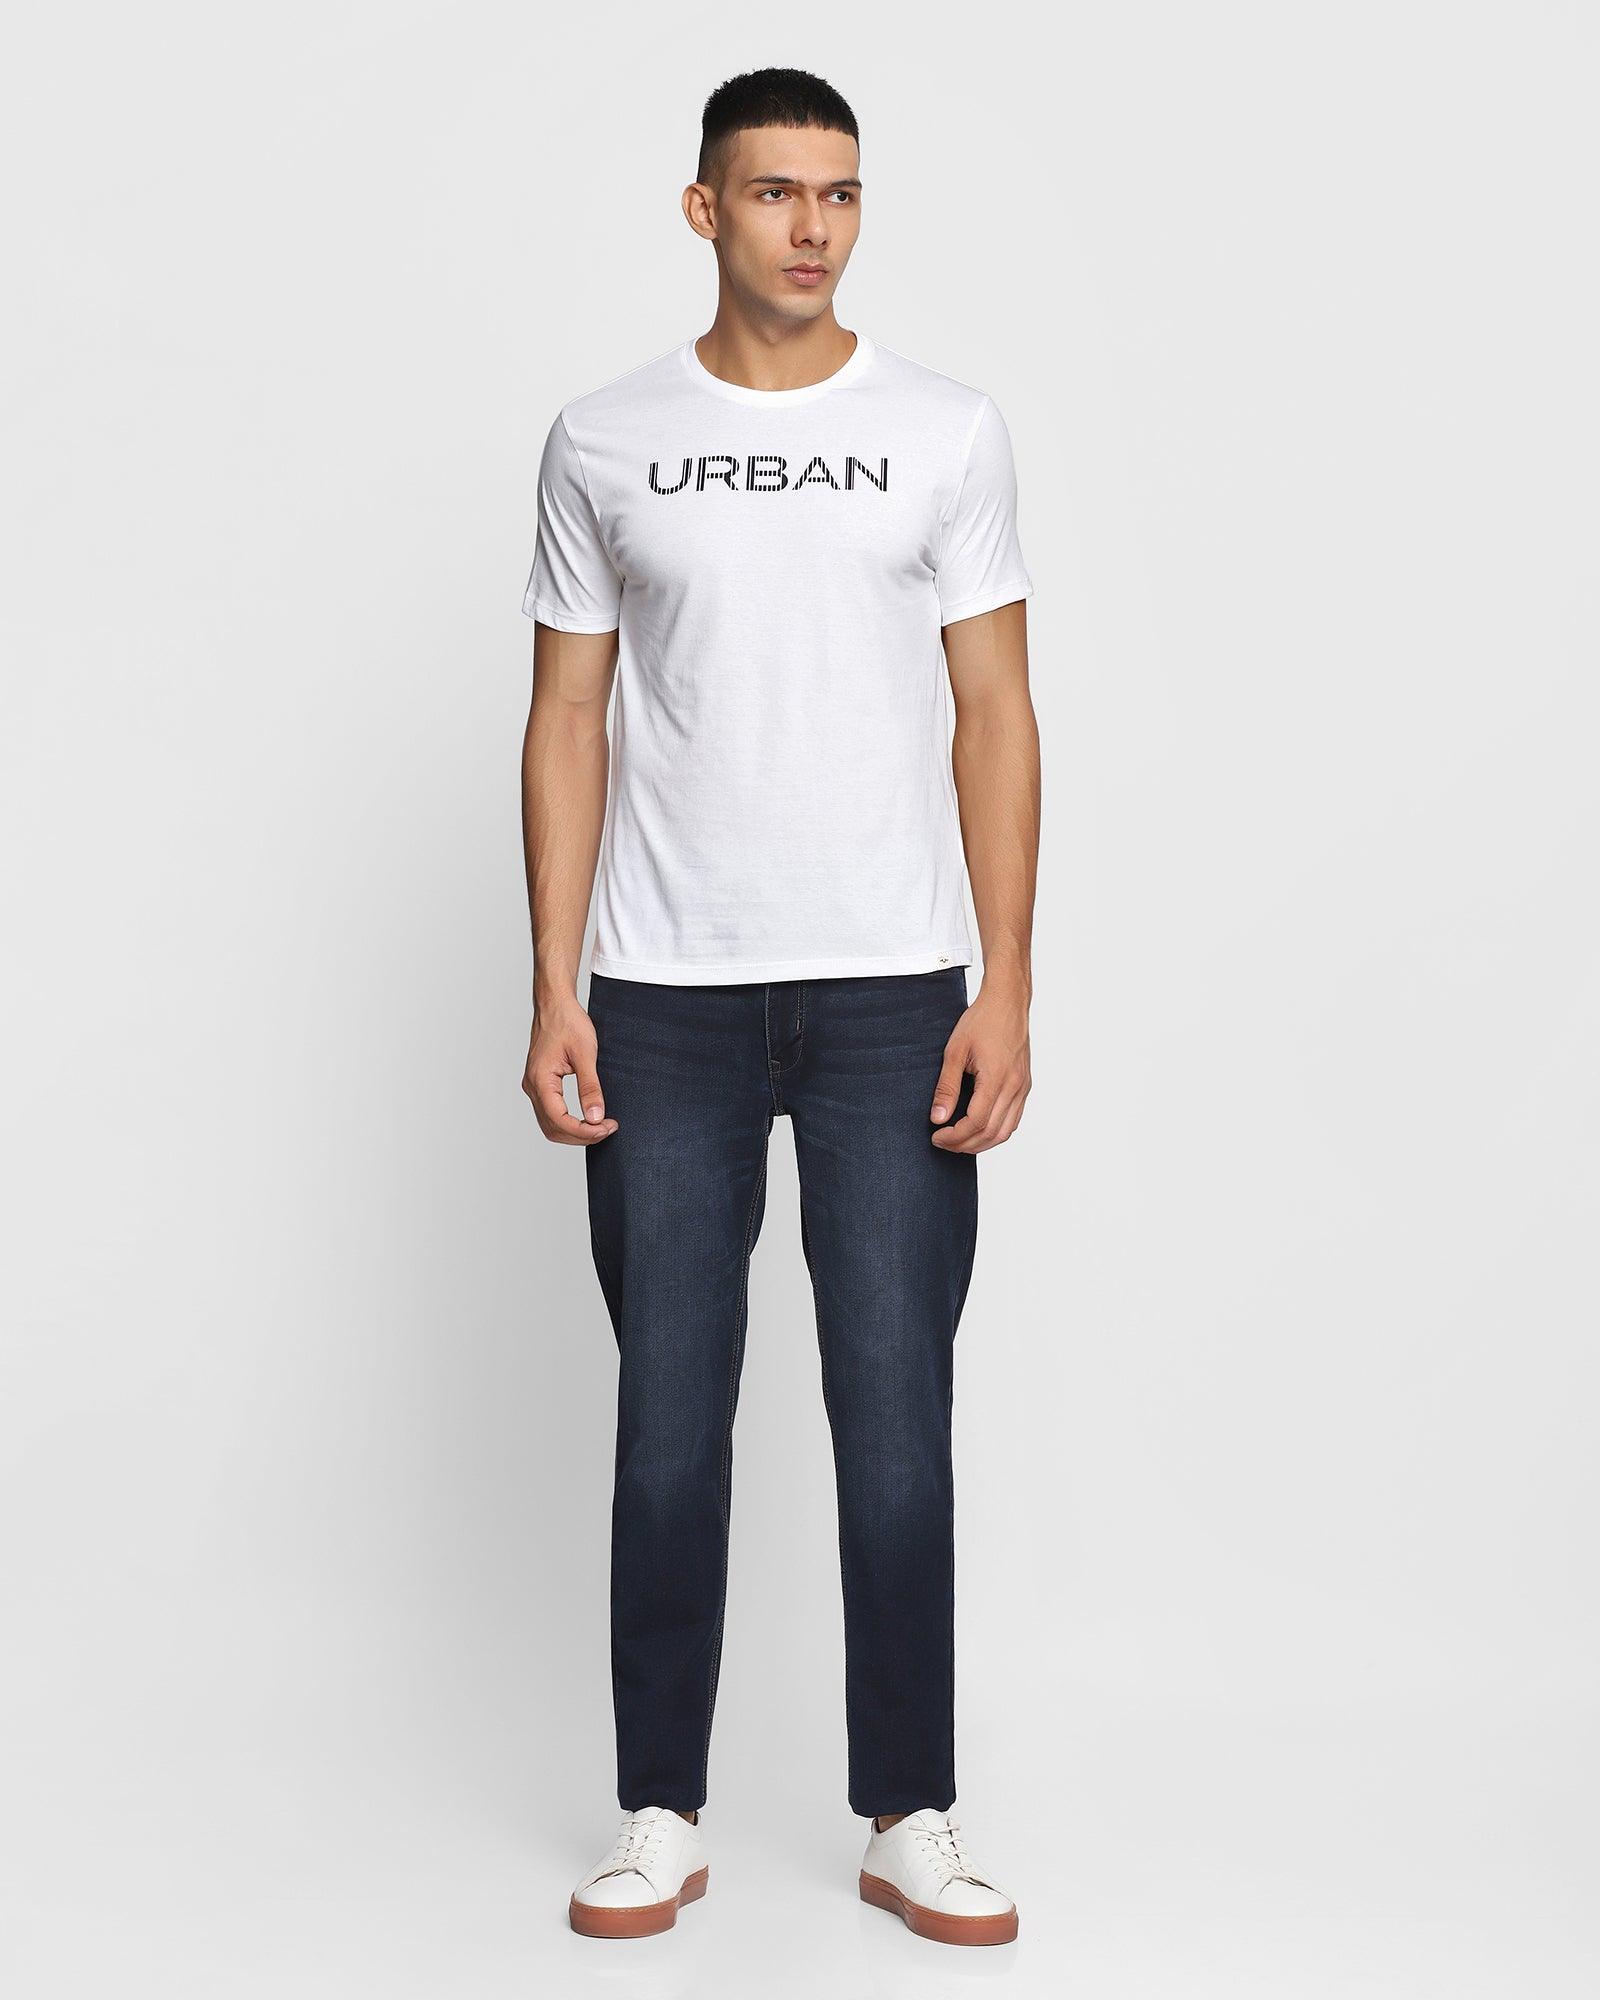 Ultrasoft Slim Comfort Buff Fit Indigo Jeans - Tap